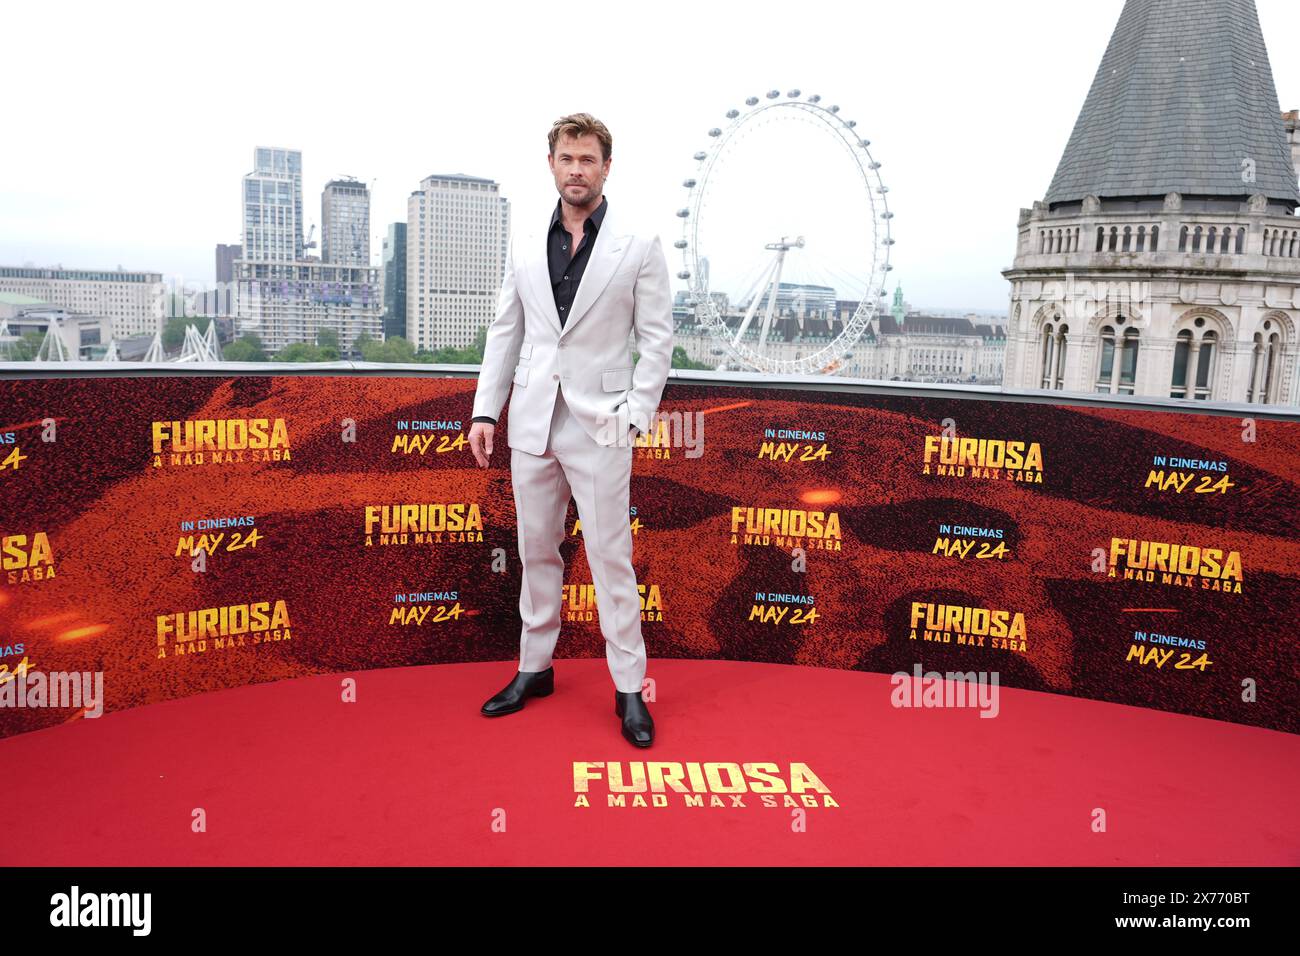 Chris Hemsworth nahm an einem Fotoanruf für Furiosa: A Mad Max Saga im Corinthia Hotel in London Teil. Bilddatum: Samstag, 18. Mai 2024. Stockfoto